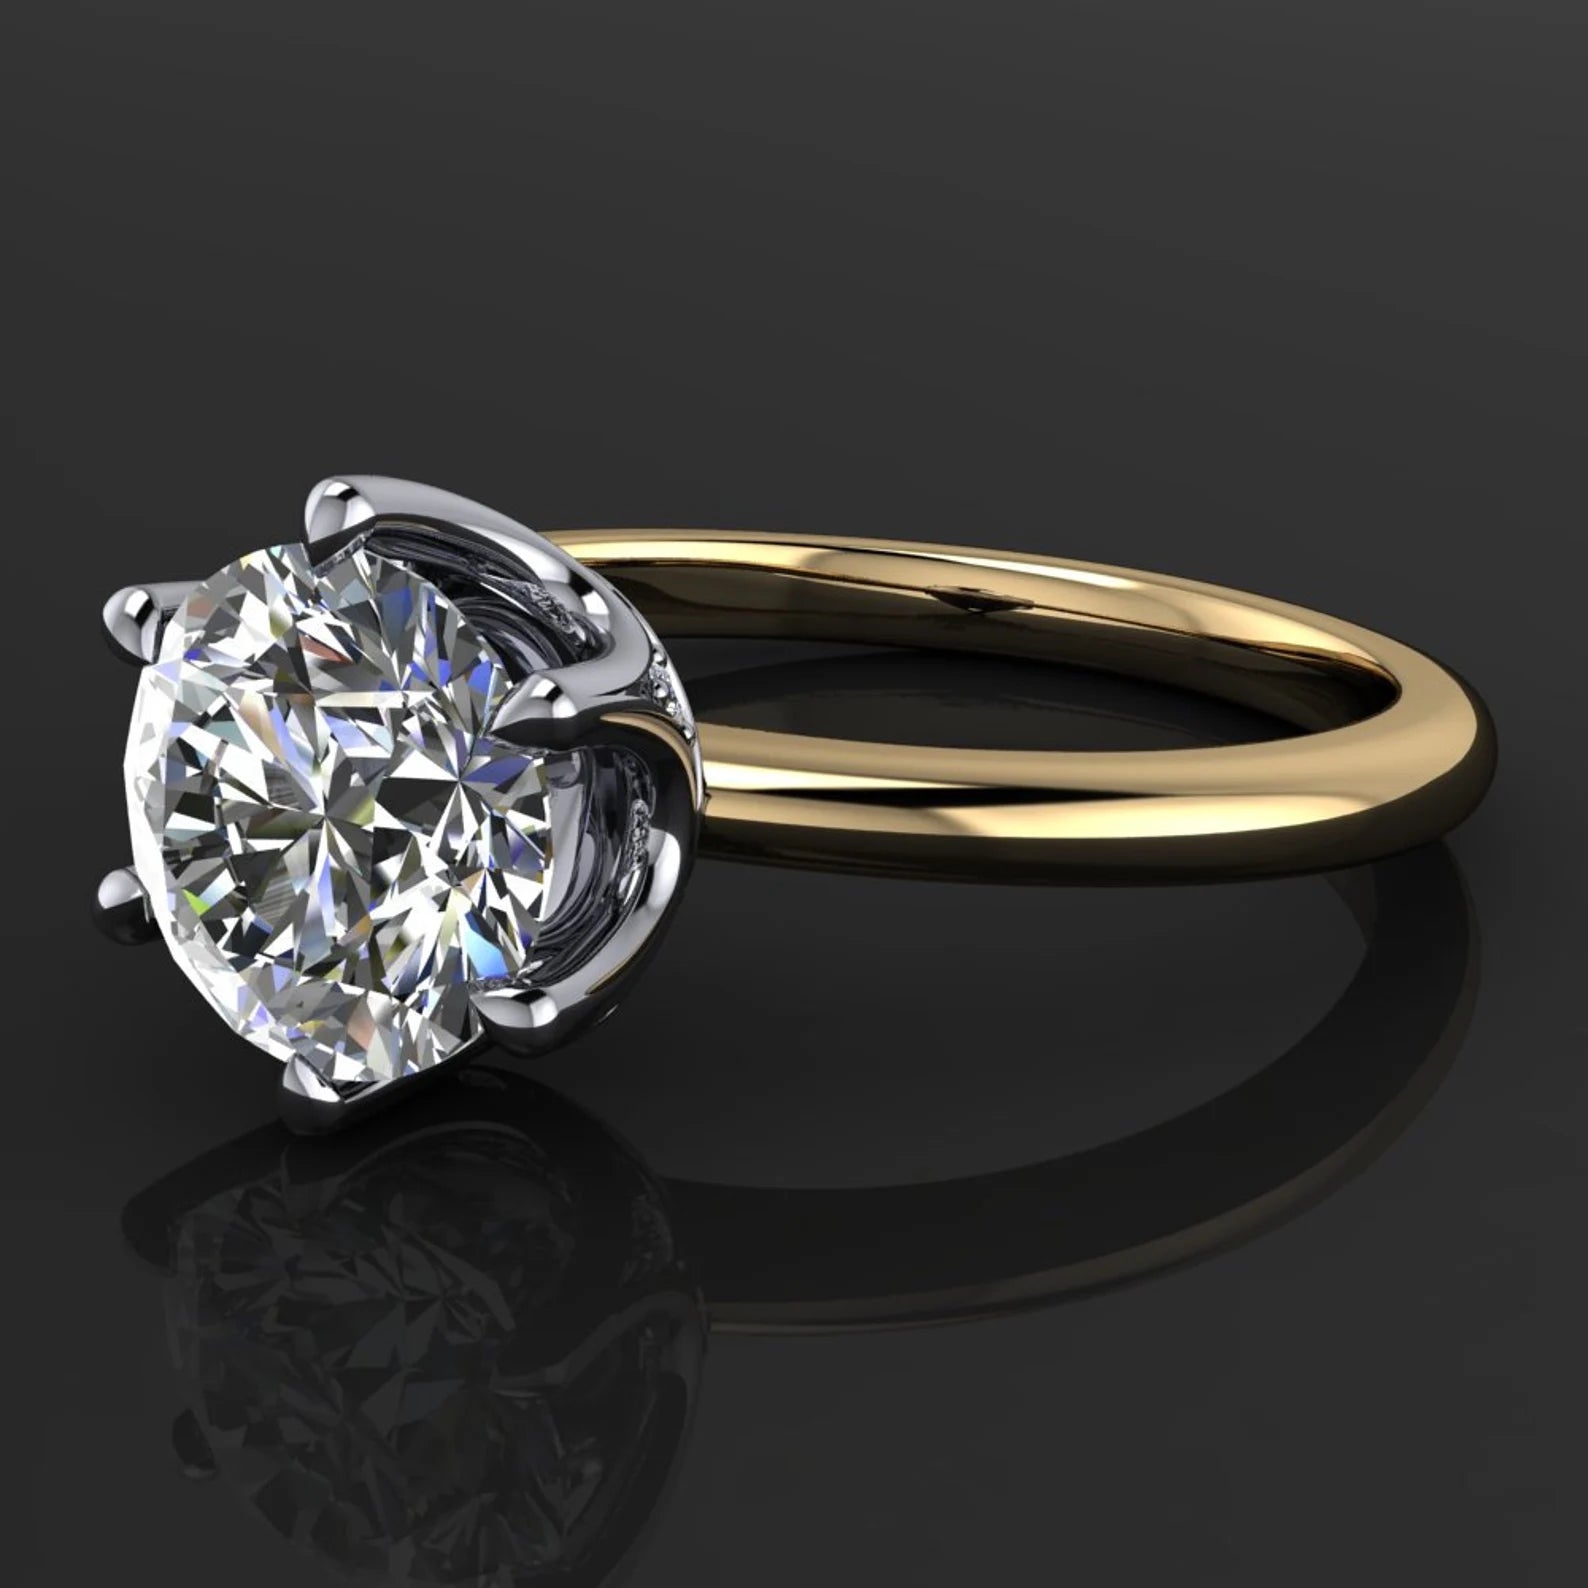 amada ring - 1.5 carat moissanite engagement ring, diamond accents - J Hollywood Designs